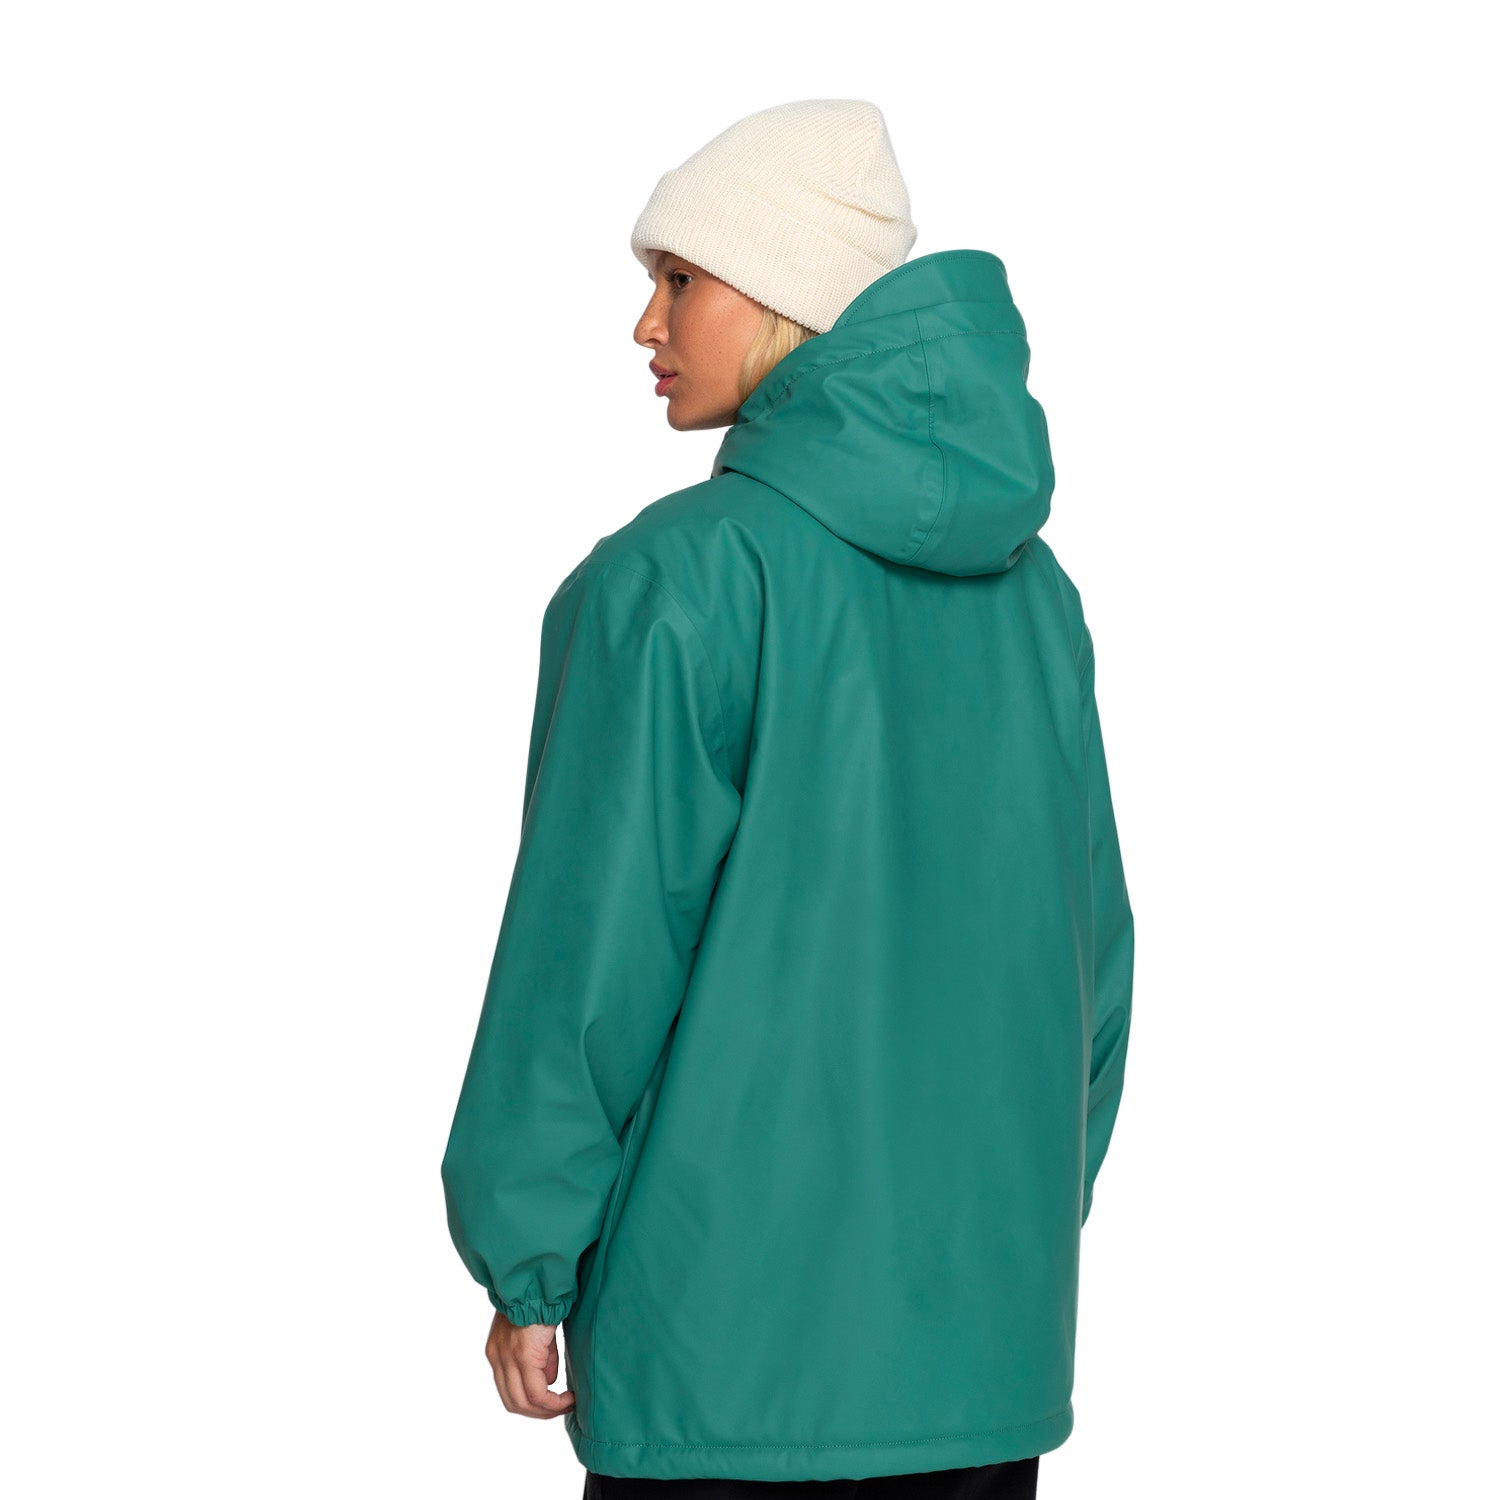 Billabong | Raindrops Waterproof Jacket - Pine